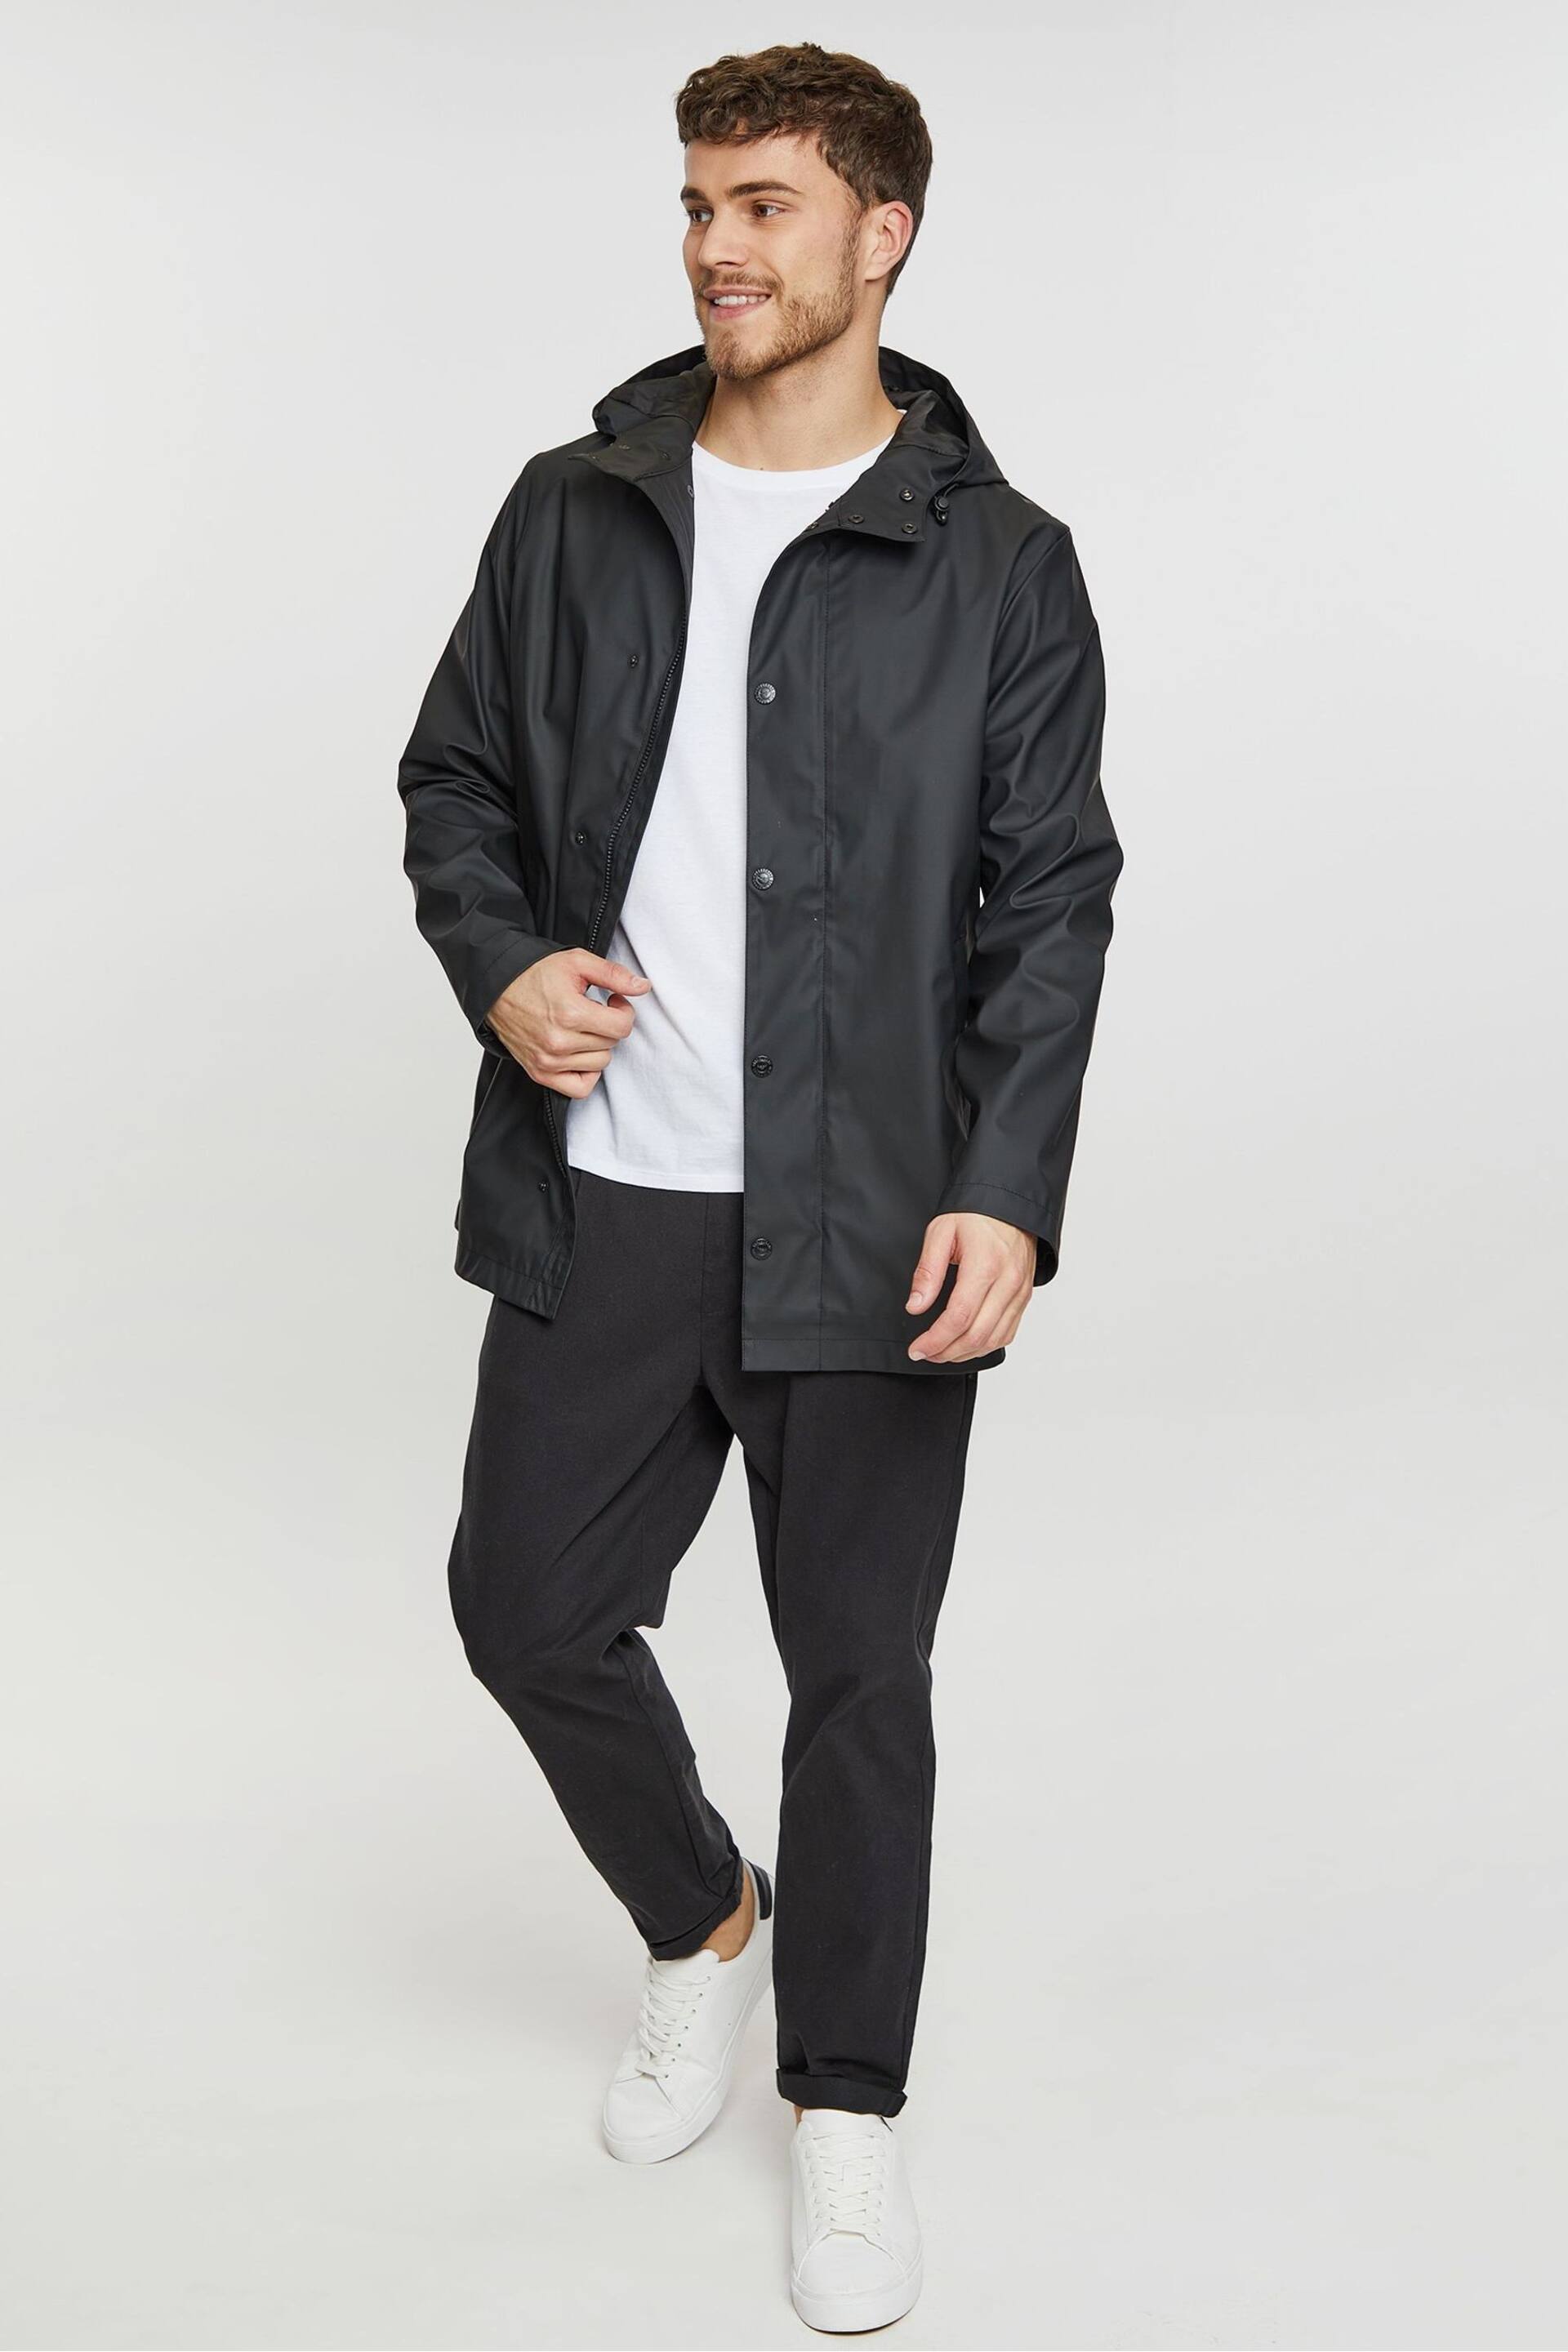 Threadbare Black Lightweight Showerproof Hooded Jacket - Image 3 of 4